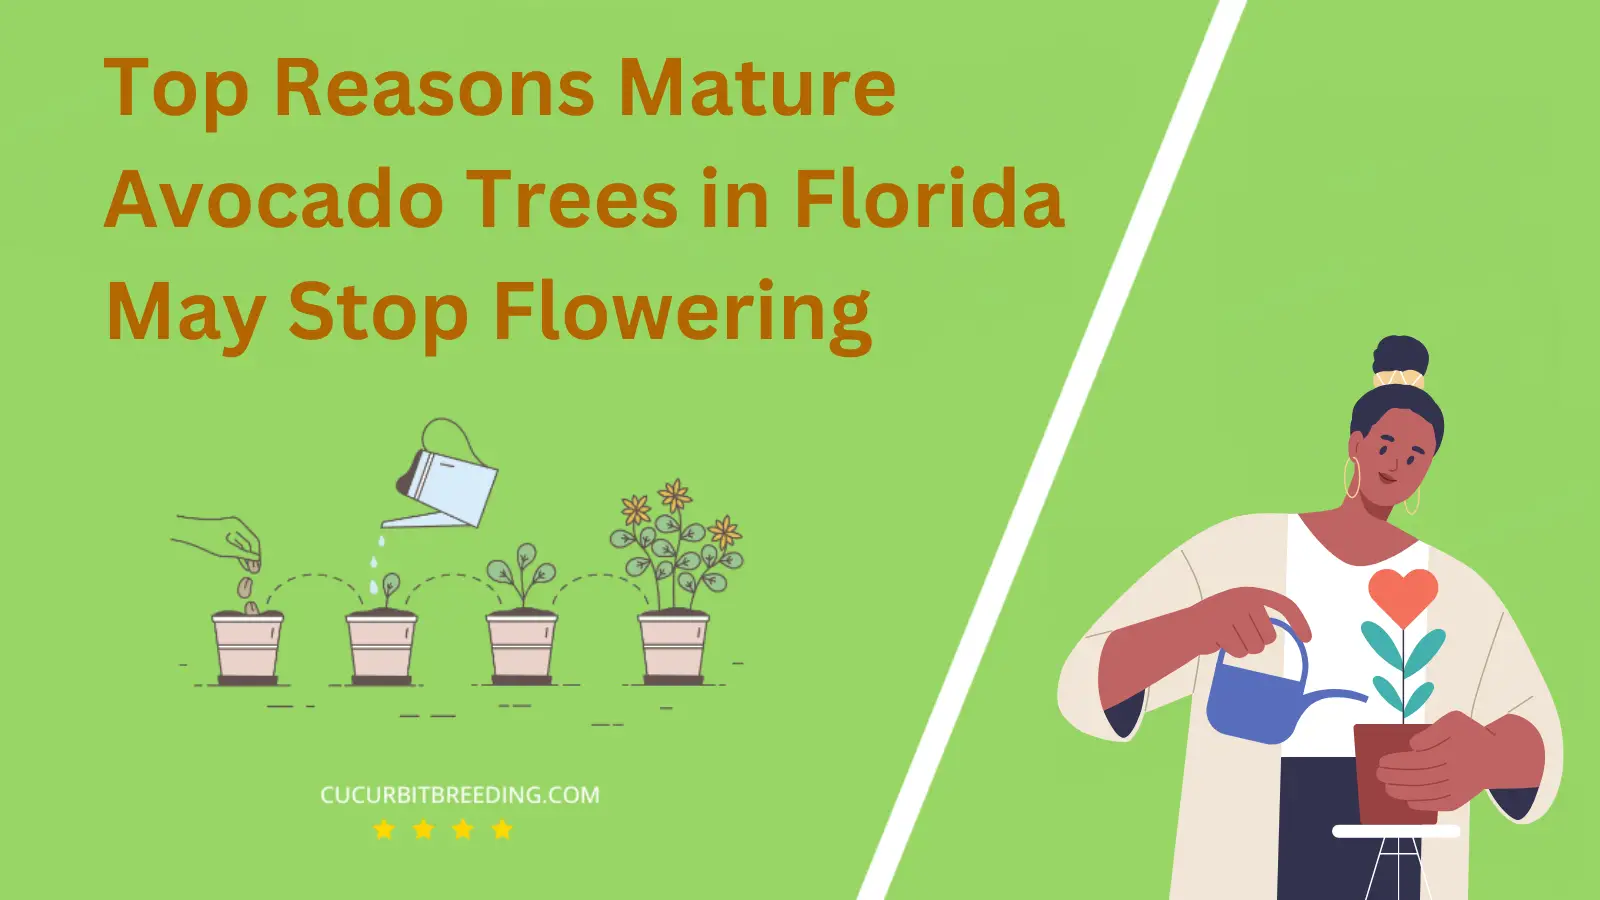 Top Reasons Mature Avocado Trees in Florida May Stop Flowering